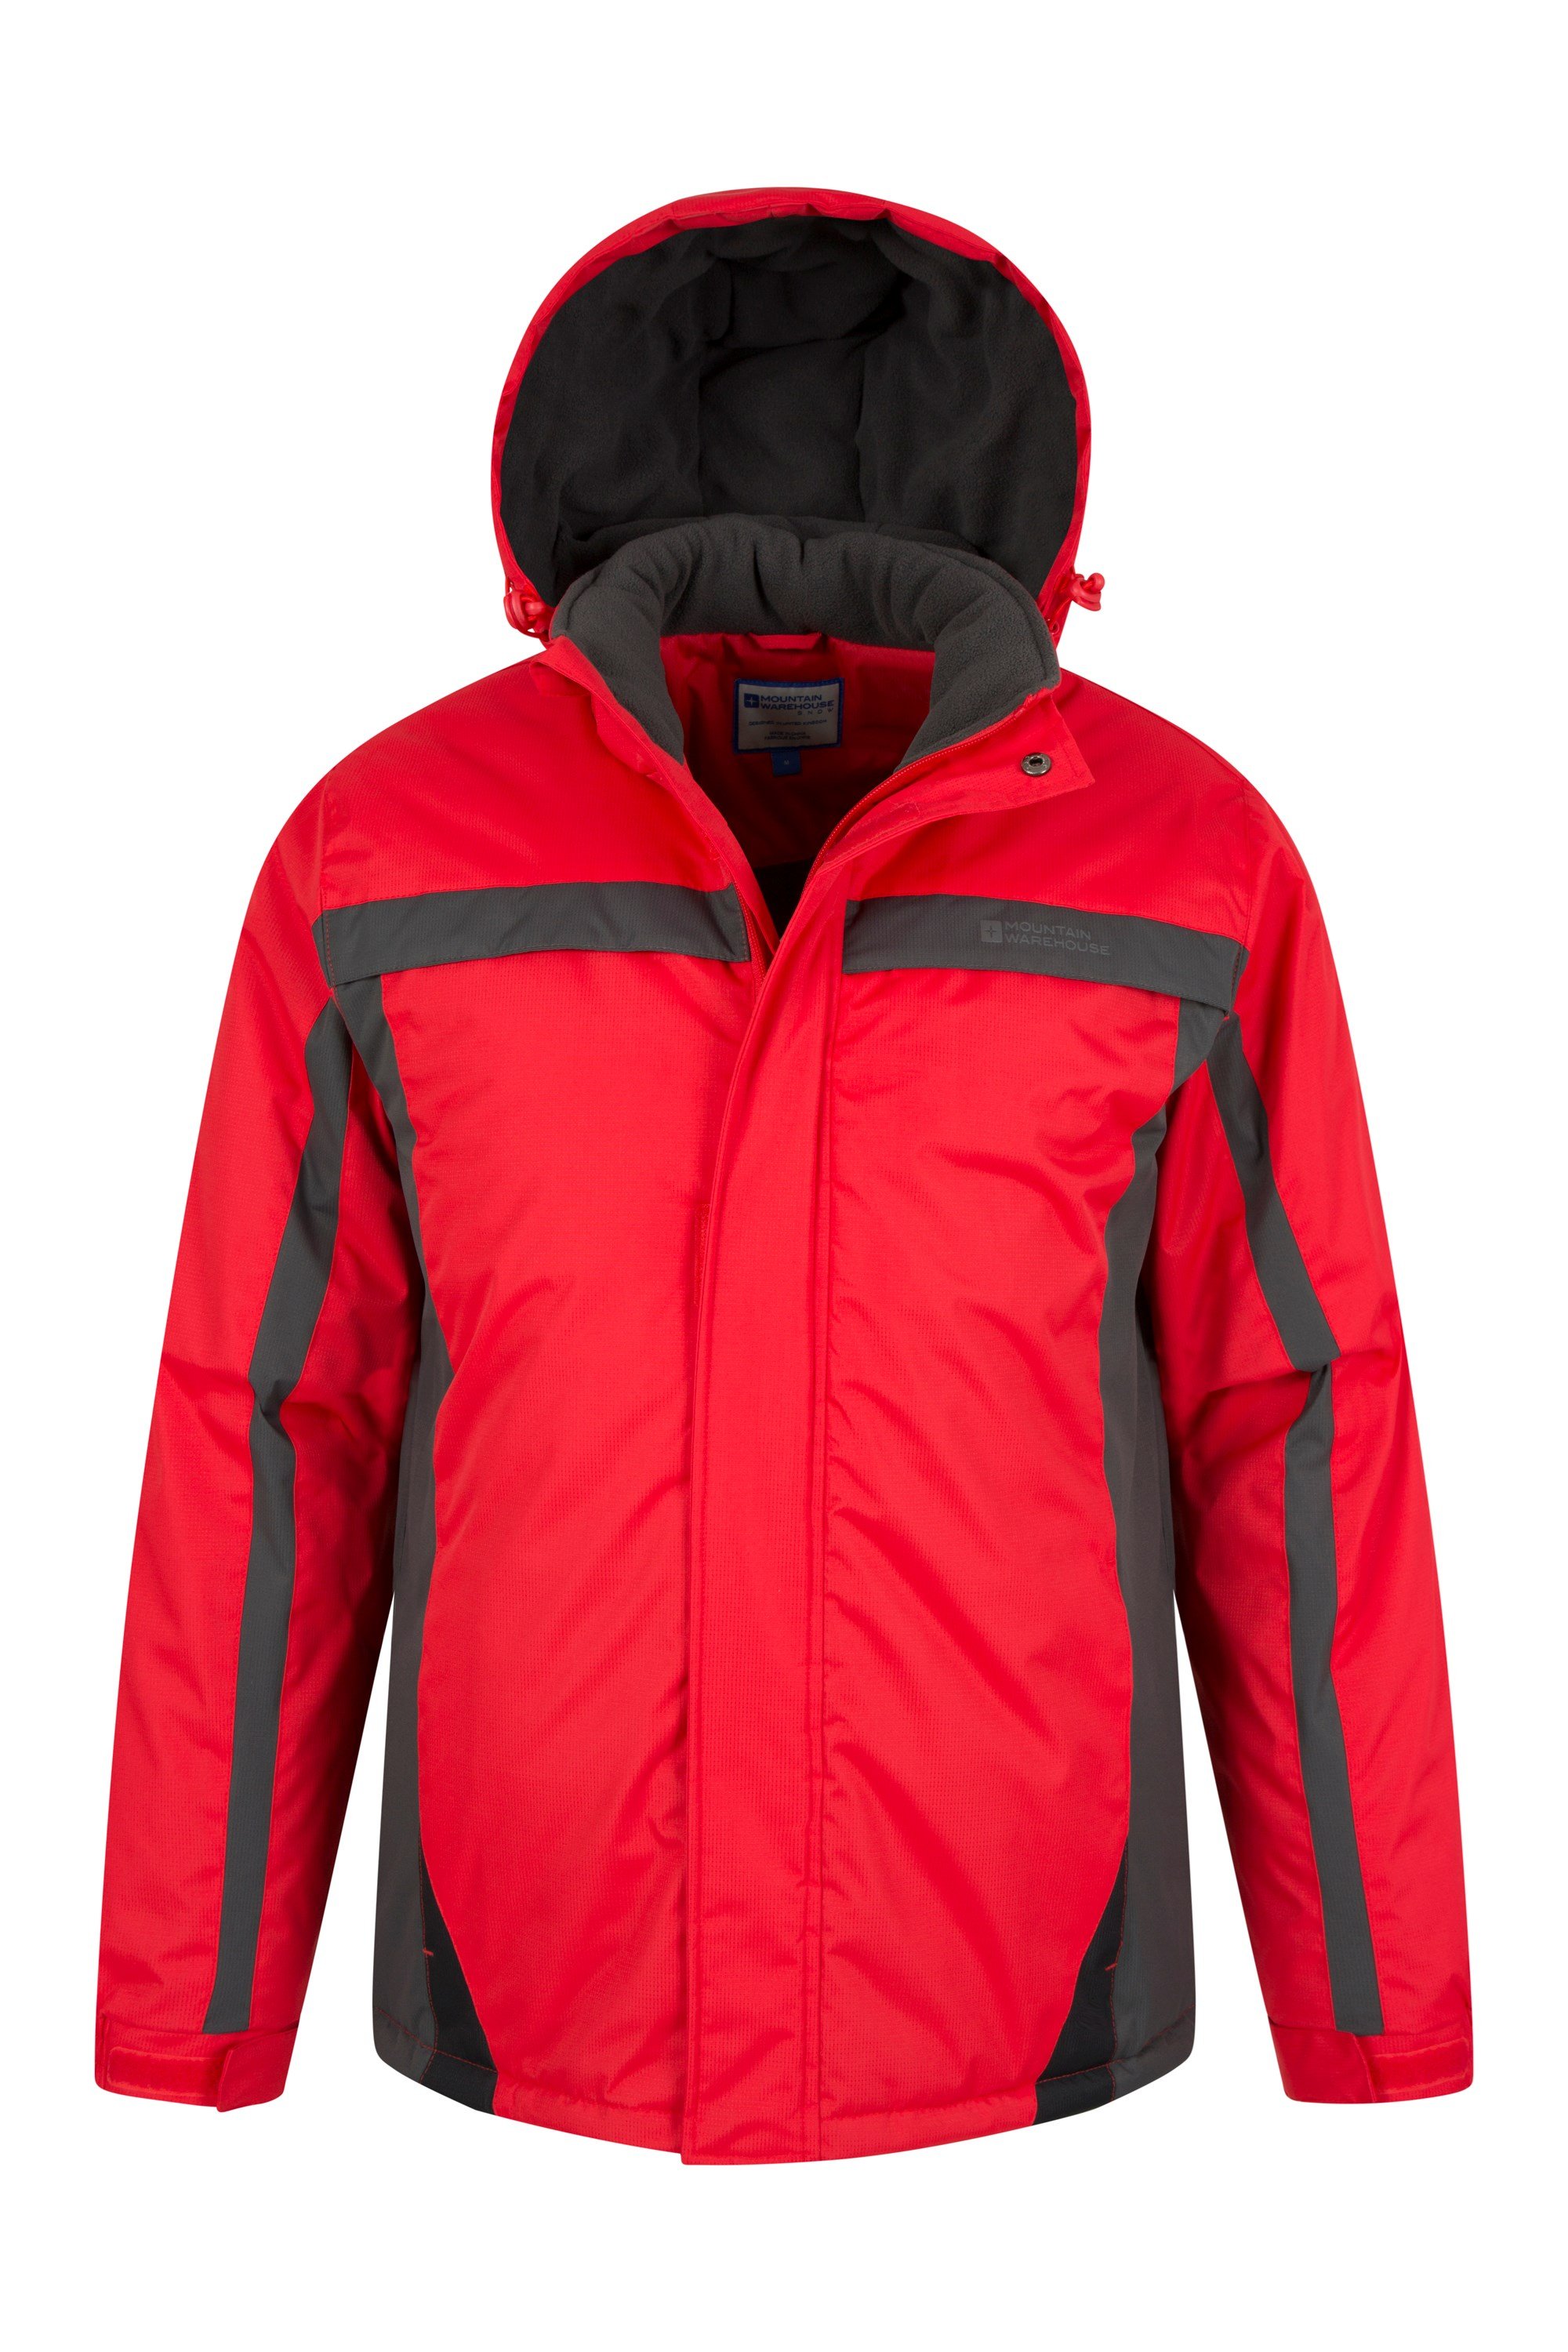 Mountain Warehouse Dusk Mens Ski Jacket Water Resistant Winter Coat 